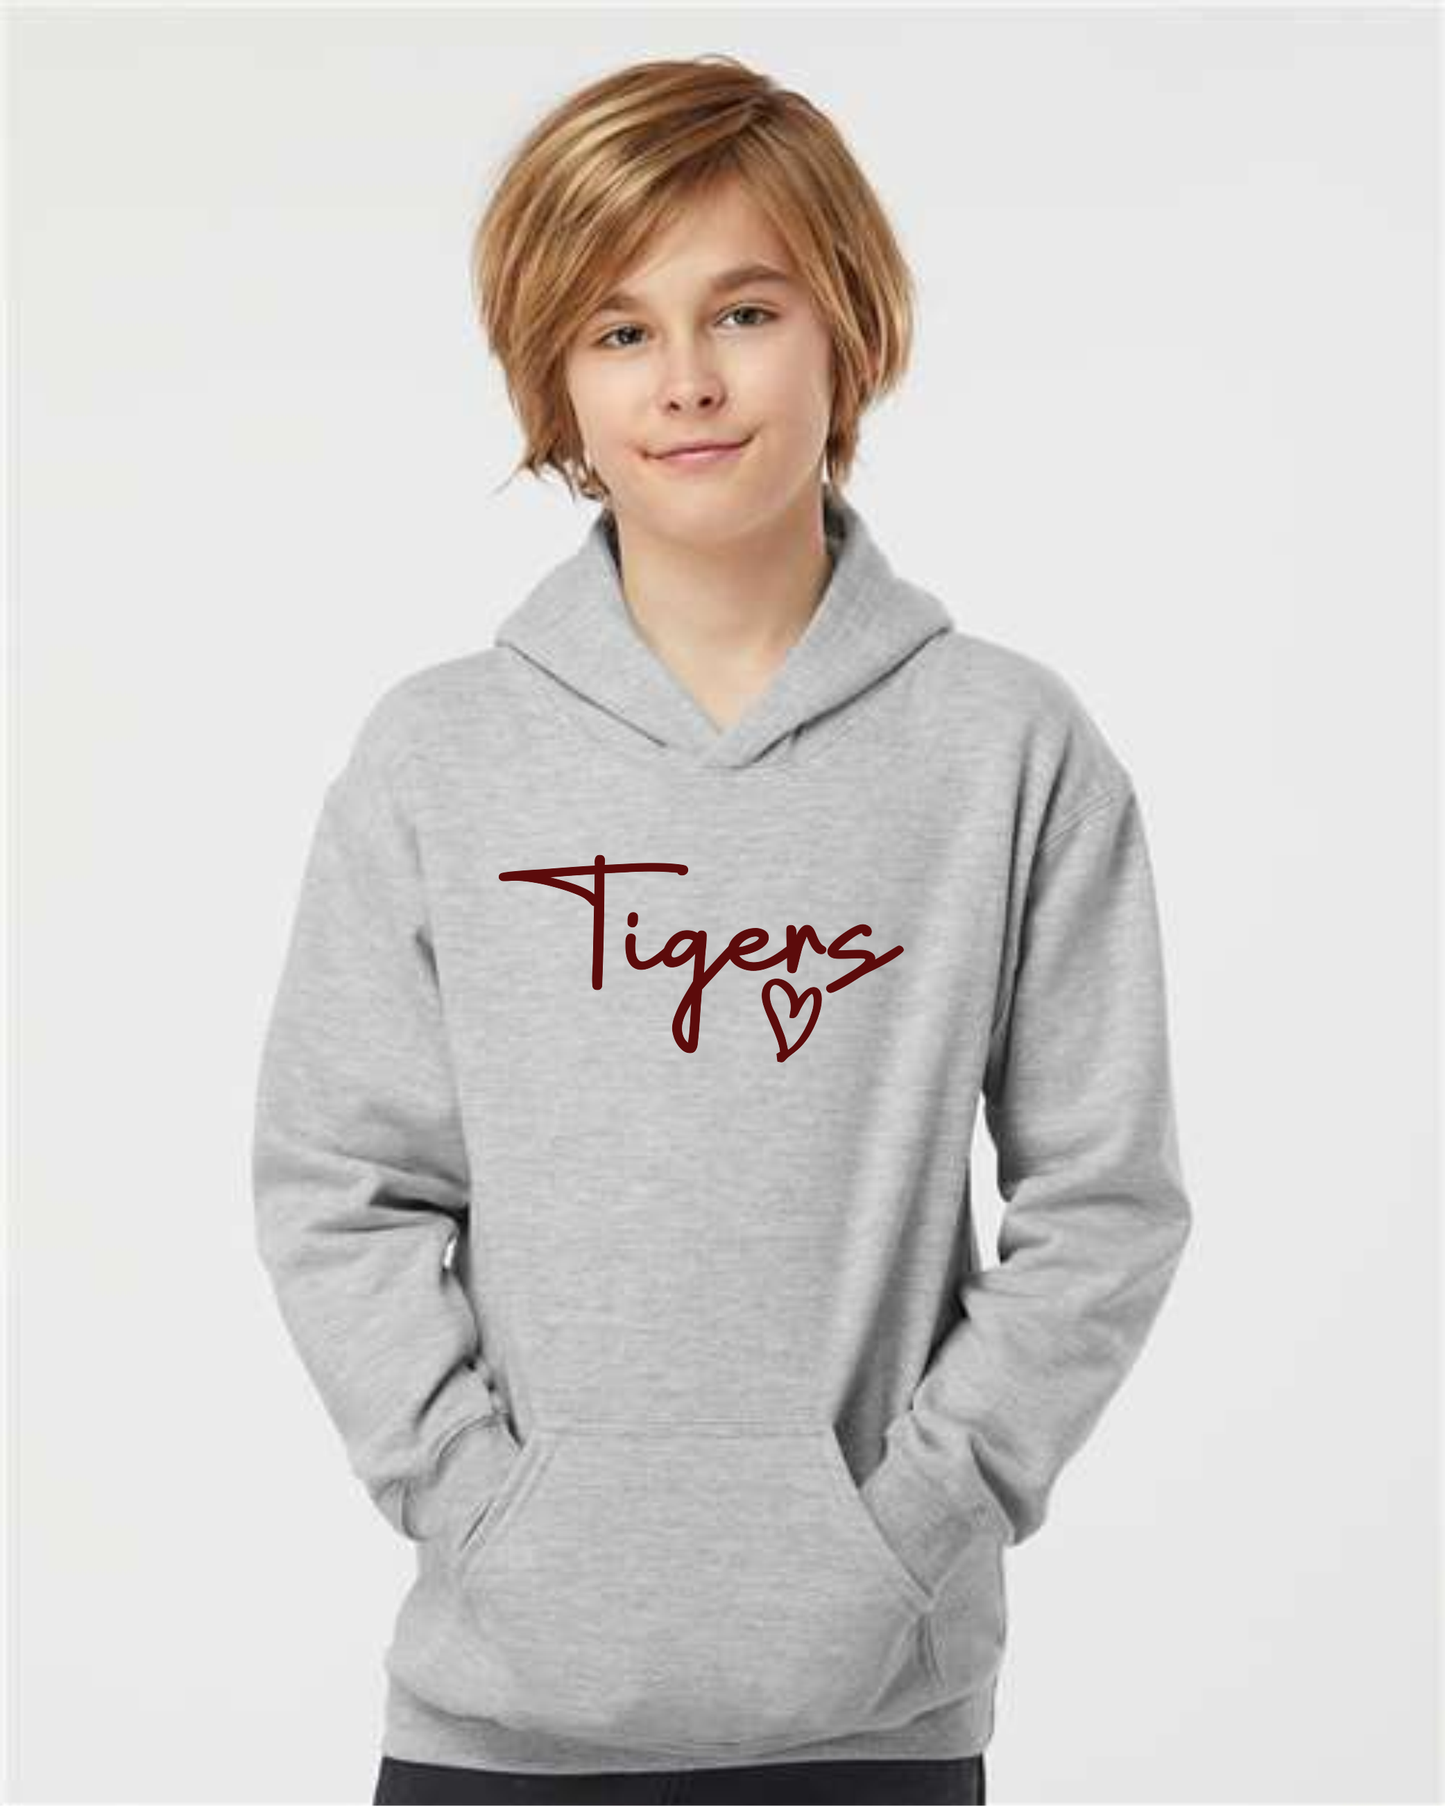 Tigers Love - Gildan Softstyle Youth Hoodie